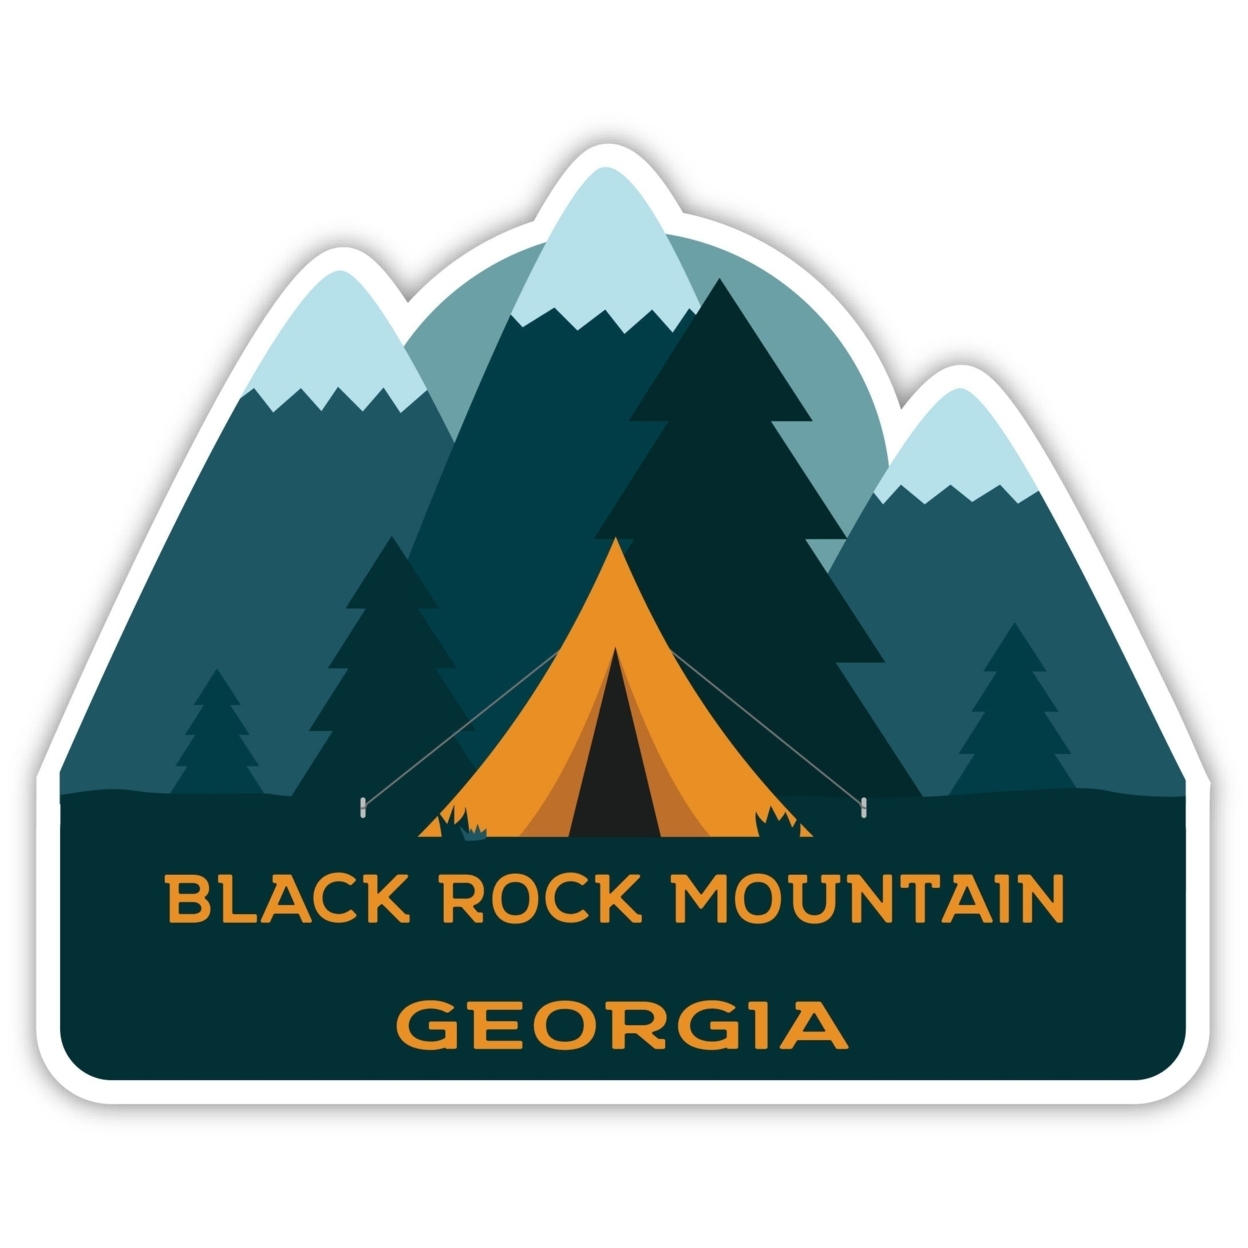 Black Rock Mountain Georgia Souvenir Decorative Stickers (Choose Theme And Size) - 4-Pack, 8-Inch, Tent